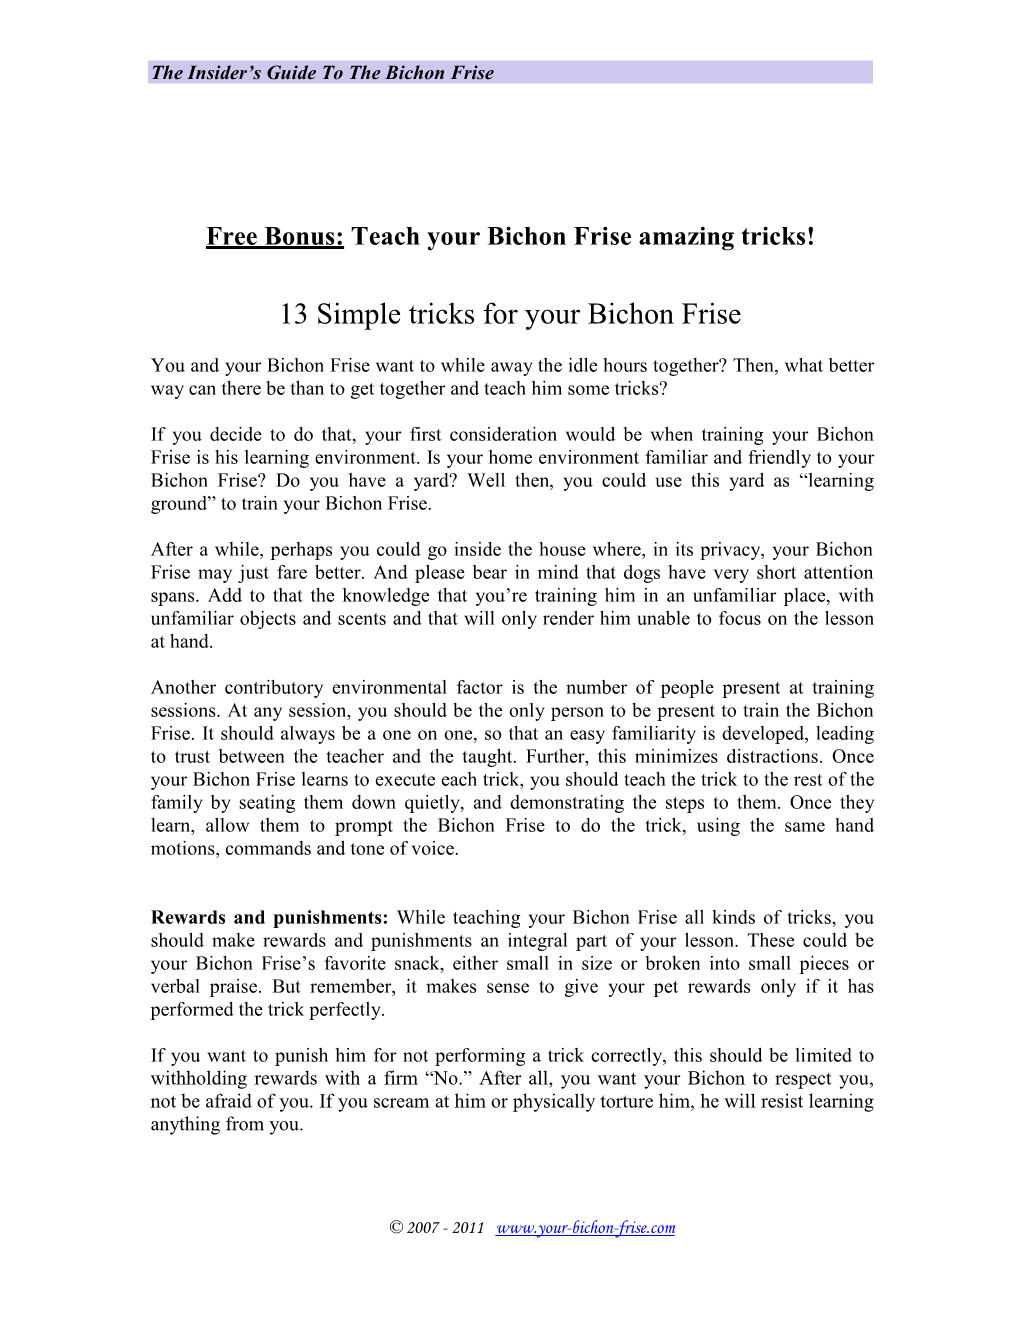 13 Simple Tricks for Your Bichon Frise